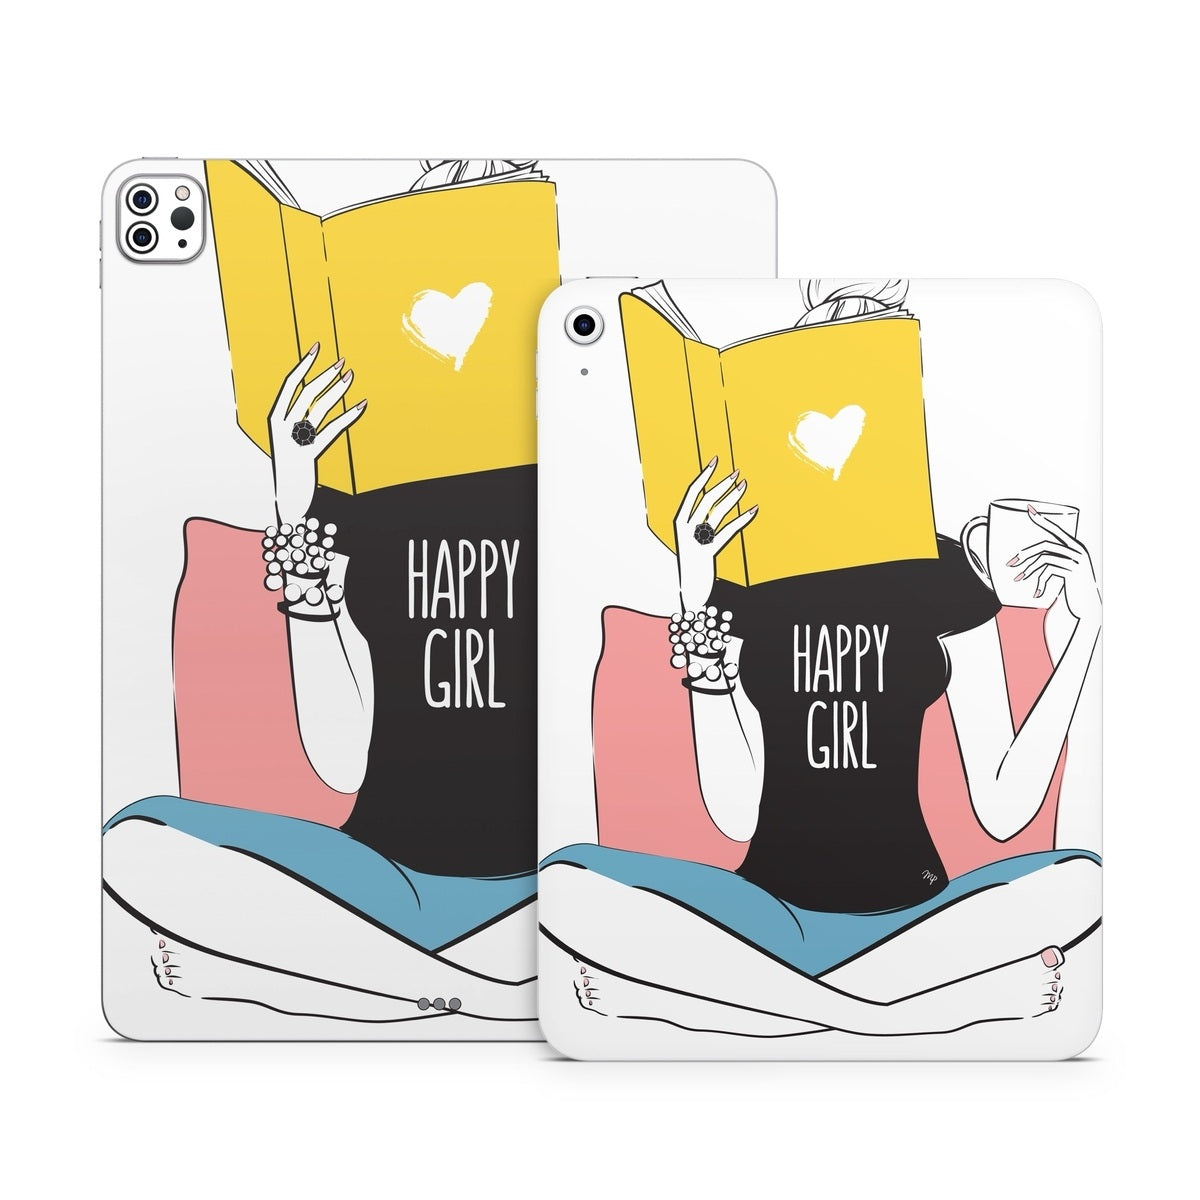 Happy Girl - Apple iPad Skin